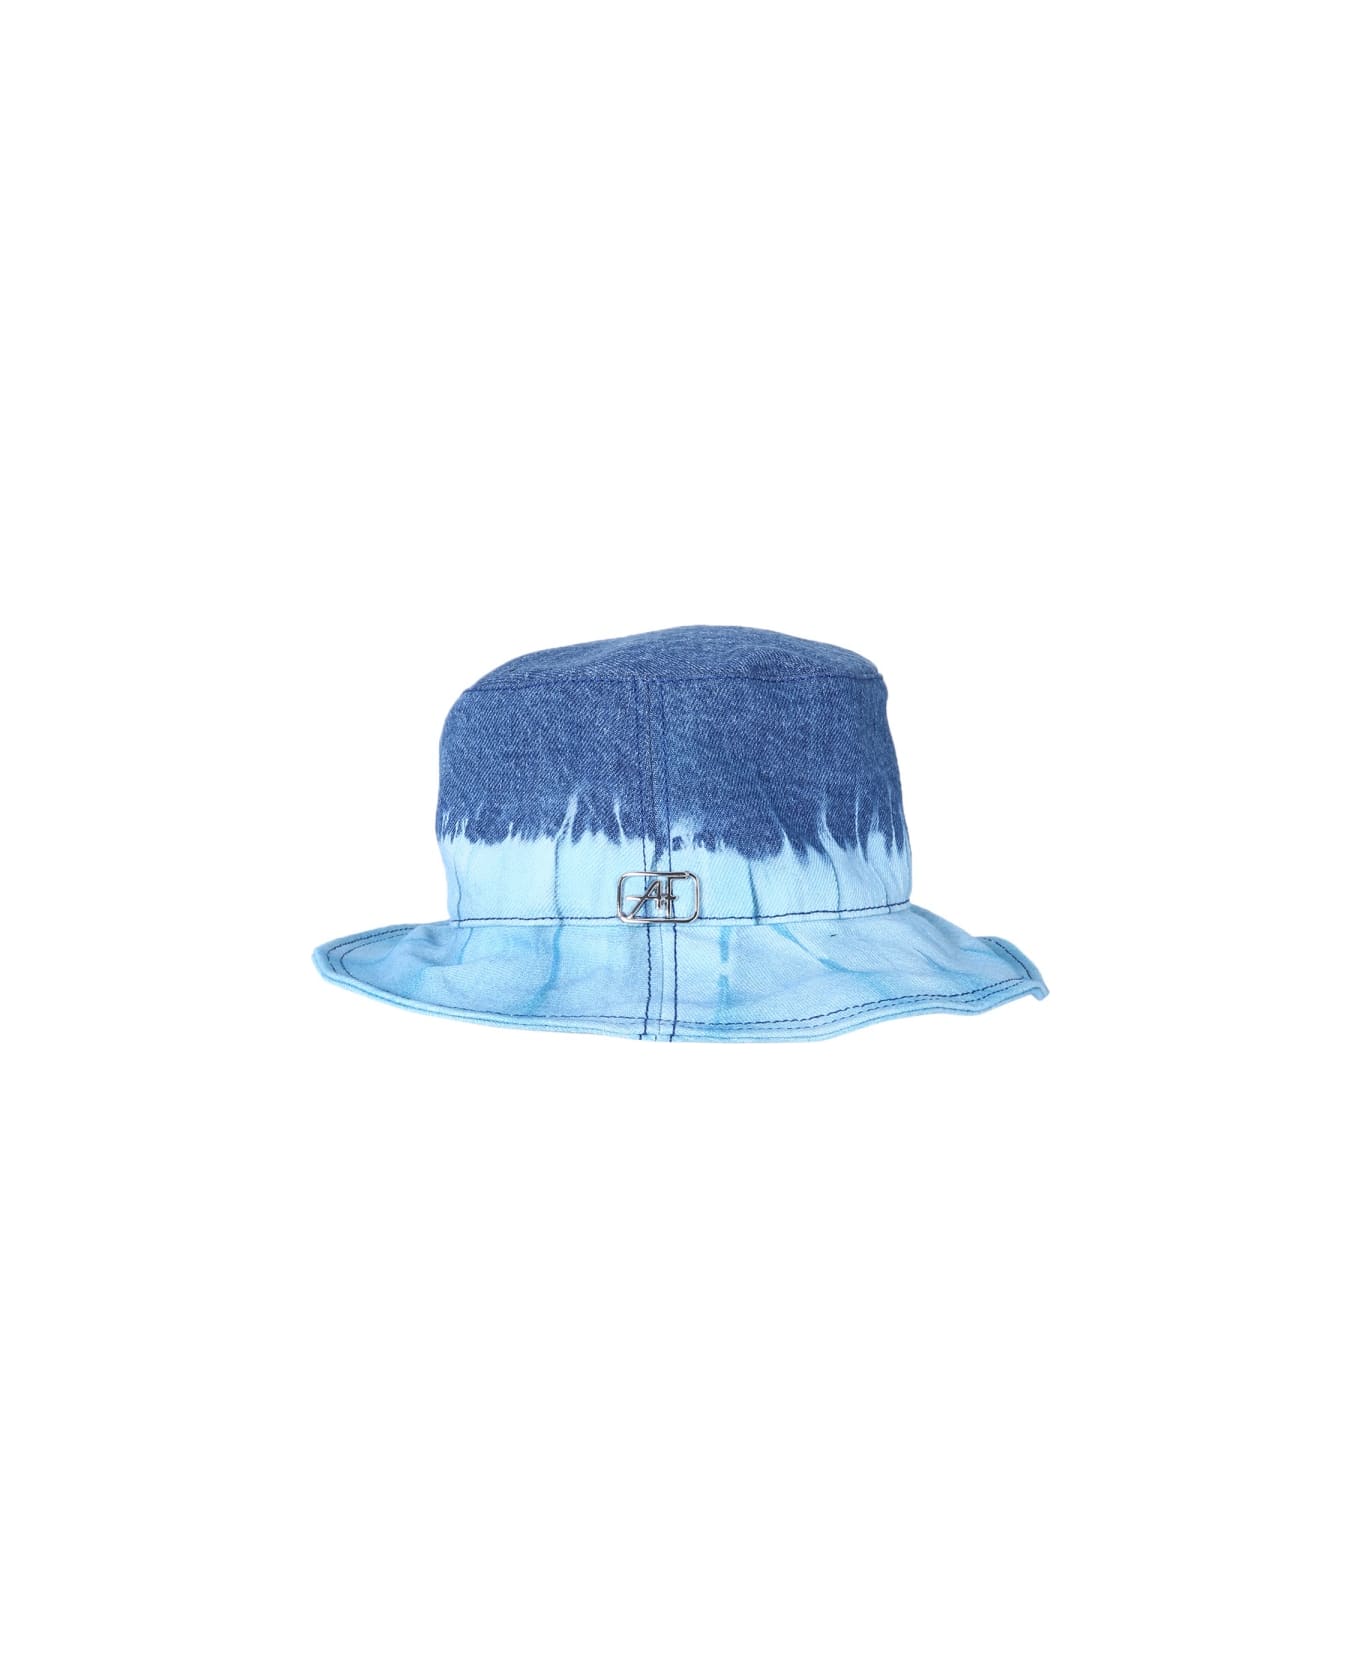 Alberta Ferretti Bucket Hat With Tie Dye Print - BLUE 帽子